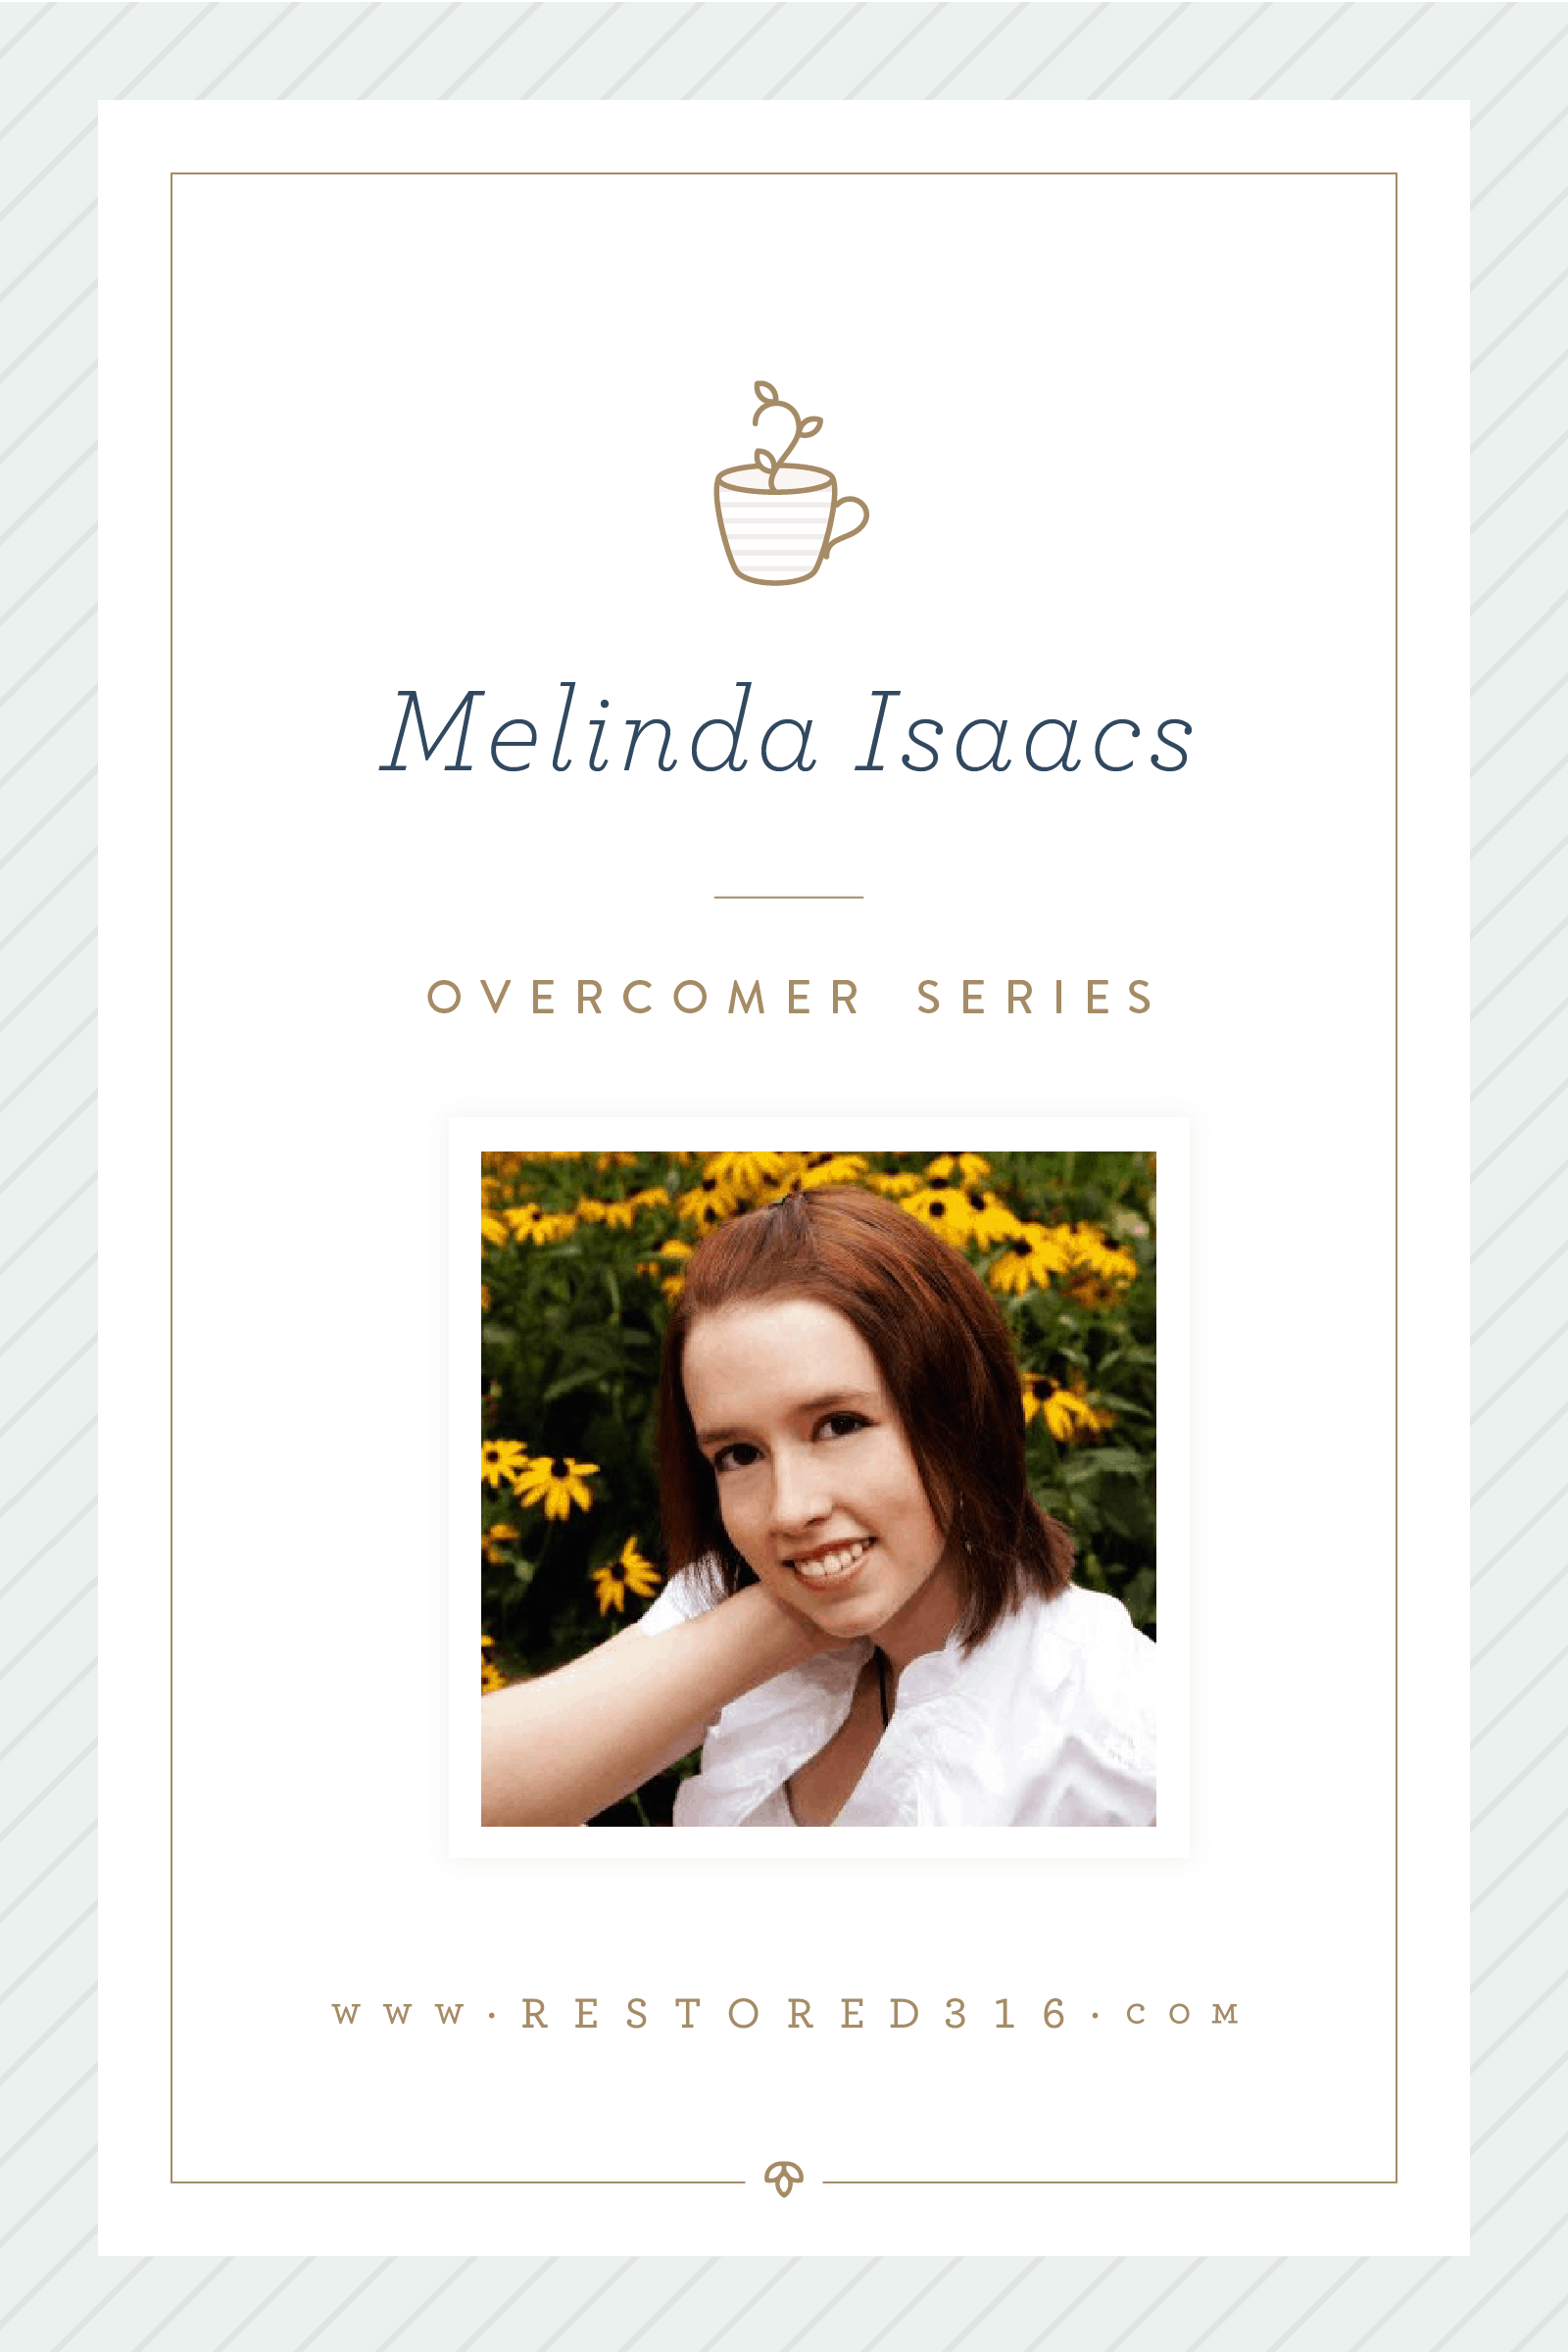 Overcomer Series with Melinda Isaacs